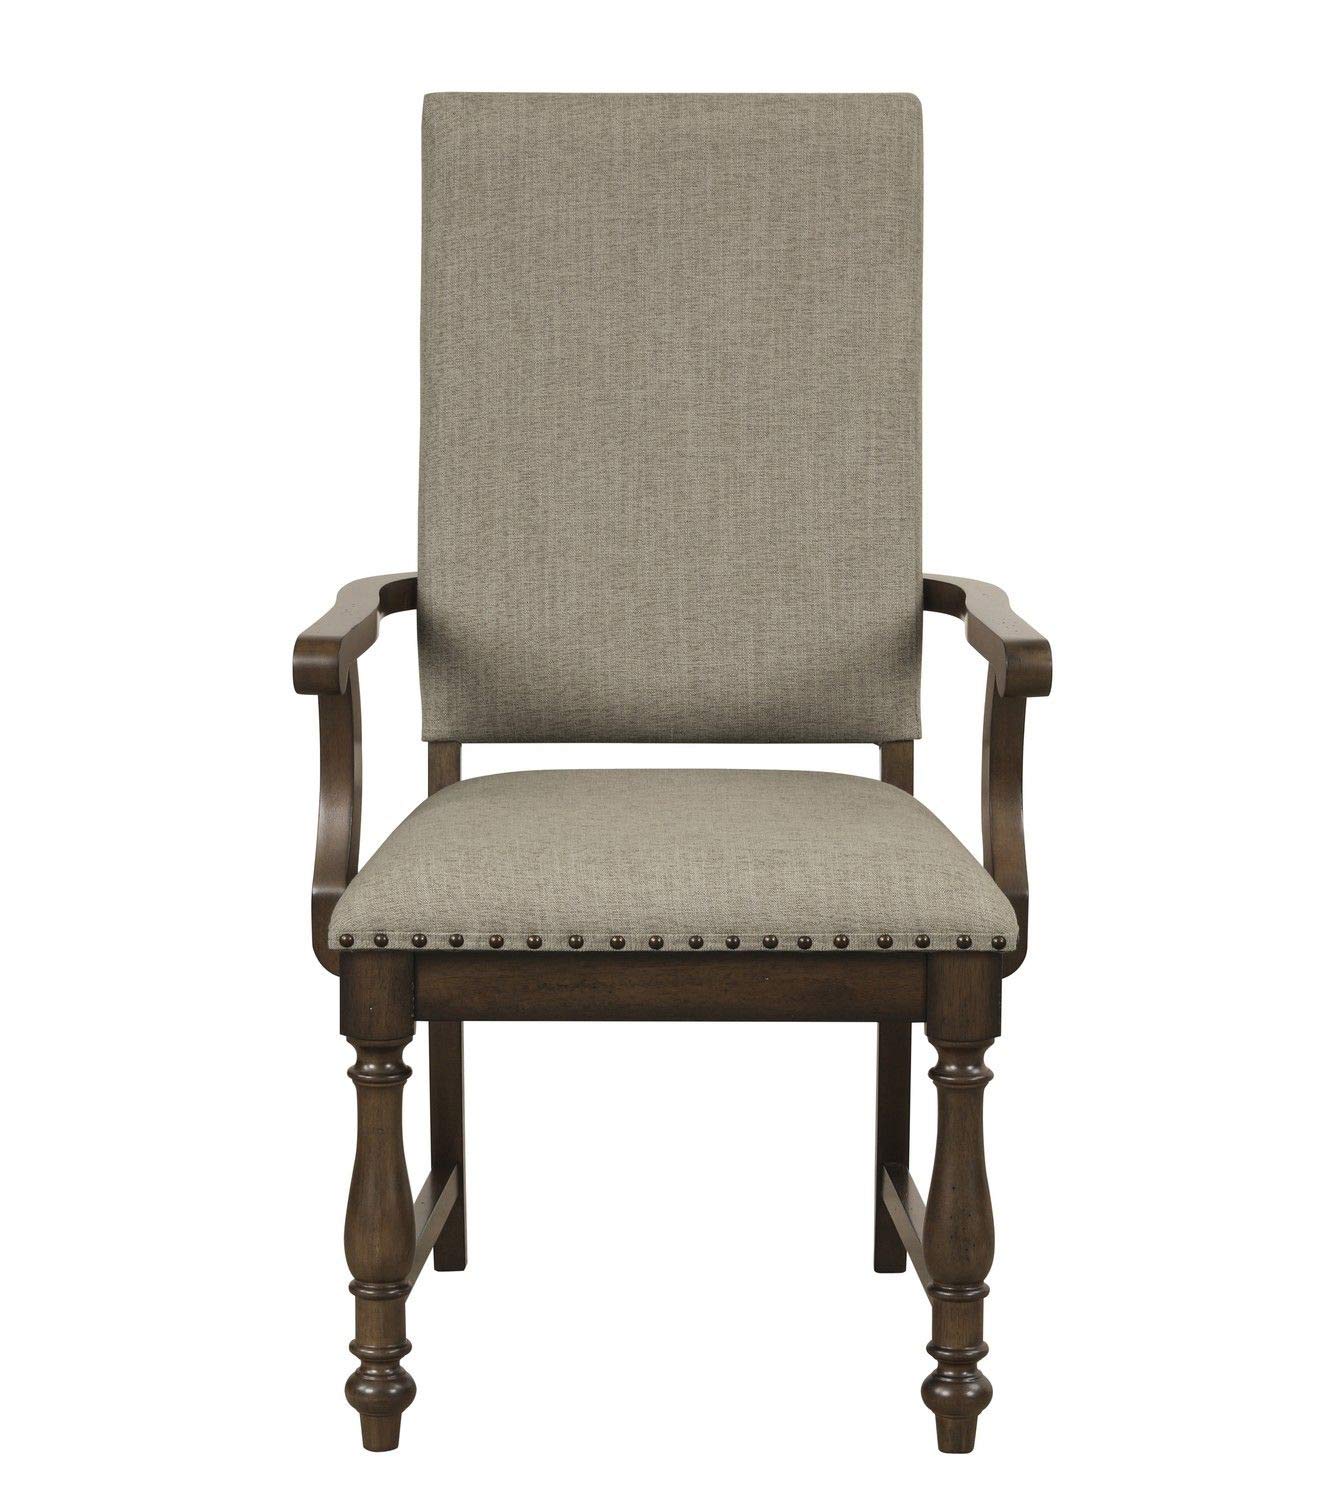 Homelegance Stonington Arm Chair - Brown/Charcoal